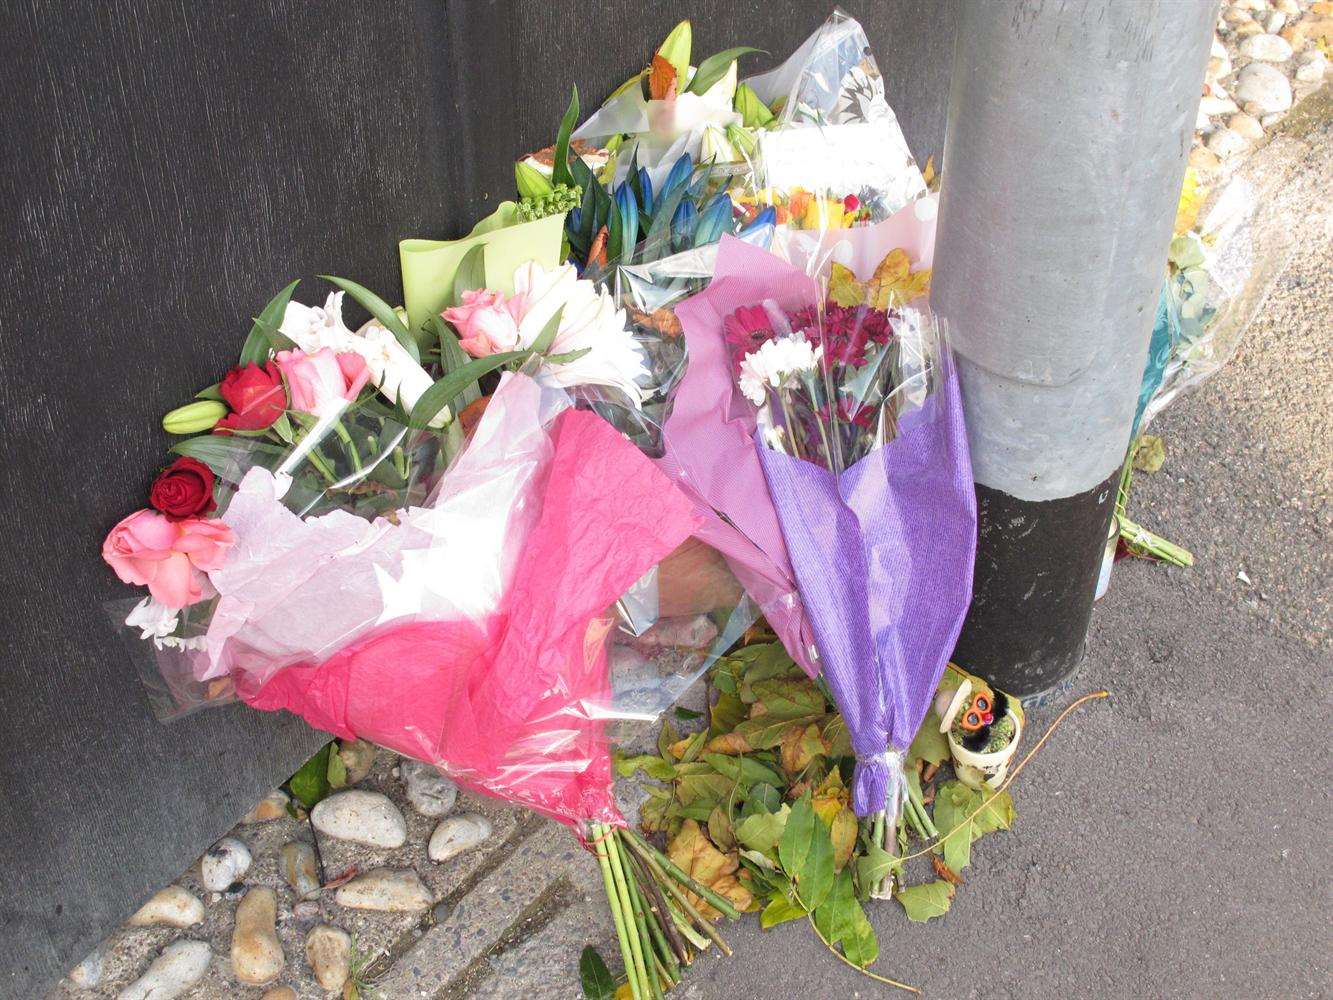 Flowers left near the scene. Picture: Suz Elvey